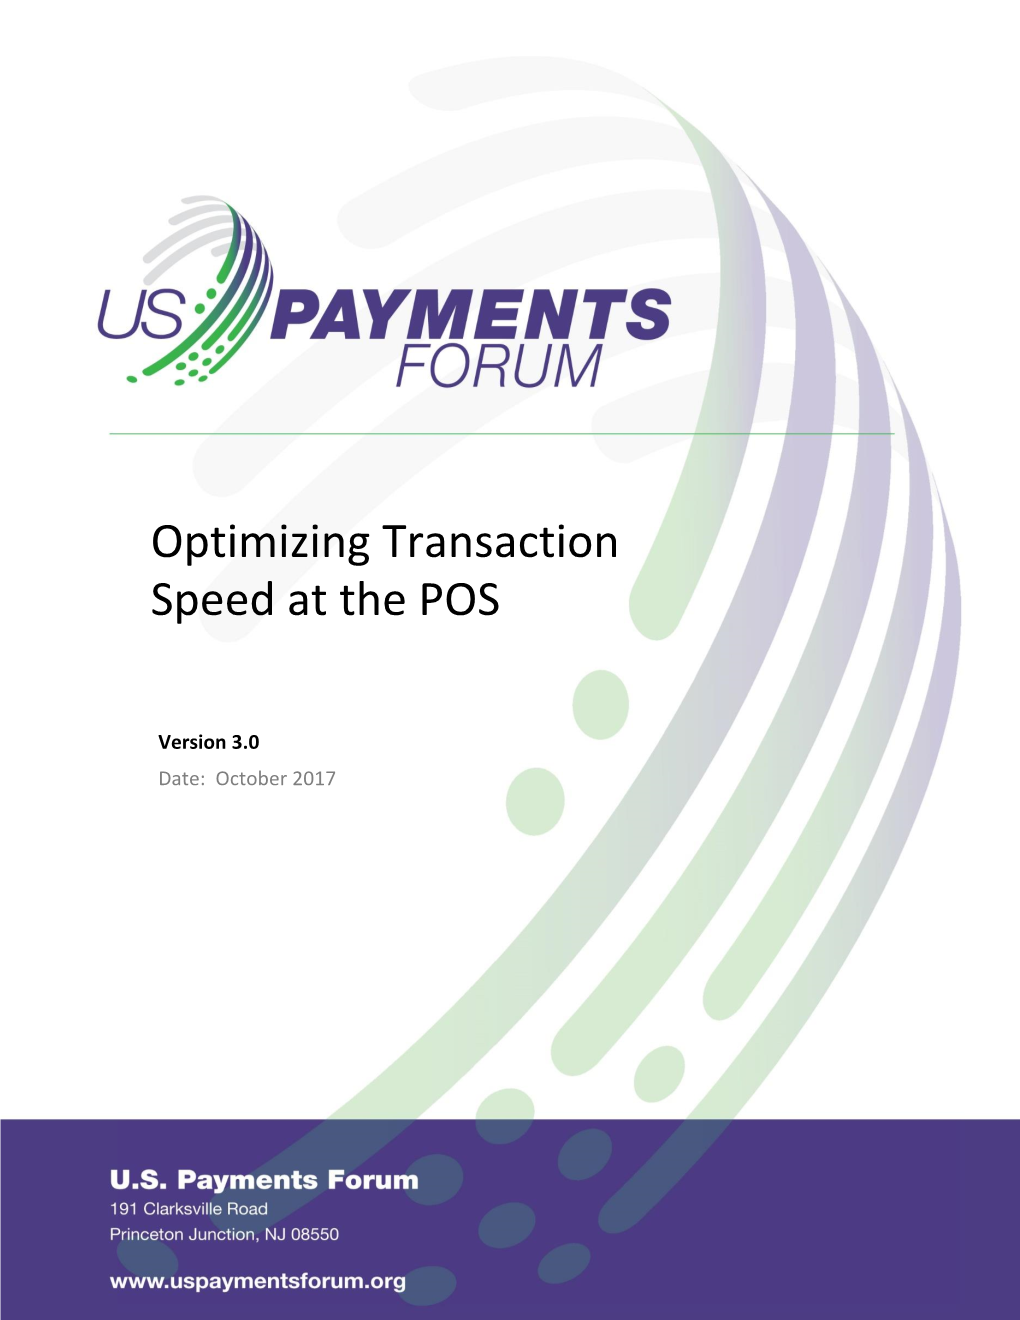 Optimizing Transaction Speed at the POS